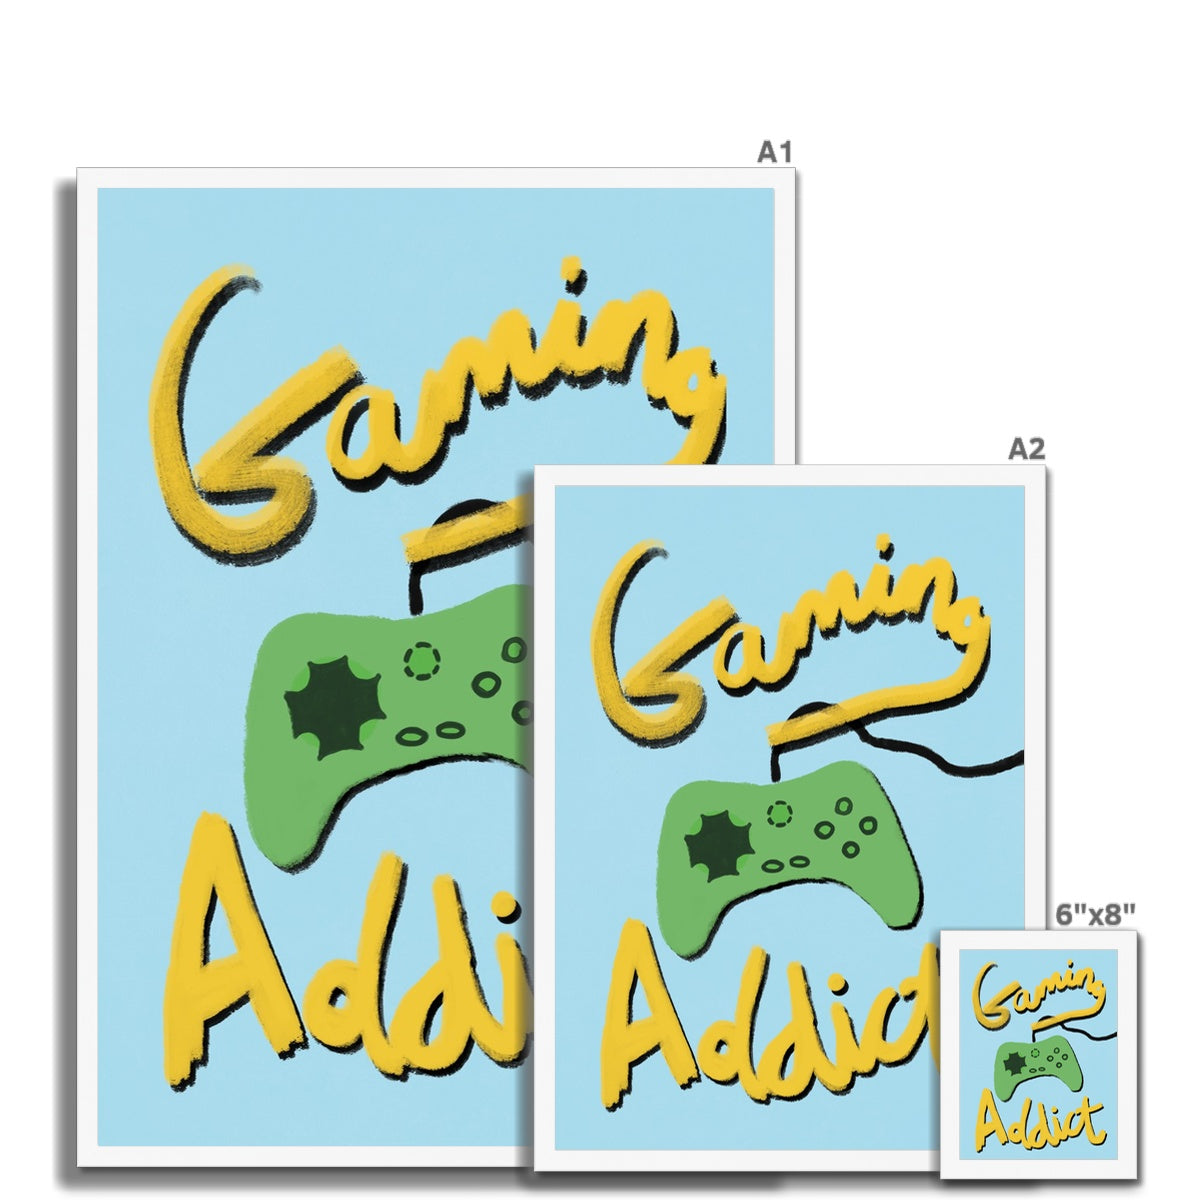 Gaming Addict Print - Light Blue, Yellow, Green Framed Print